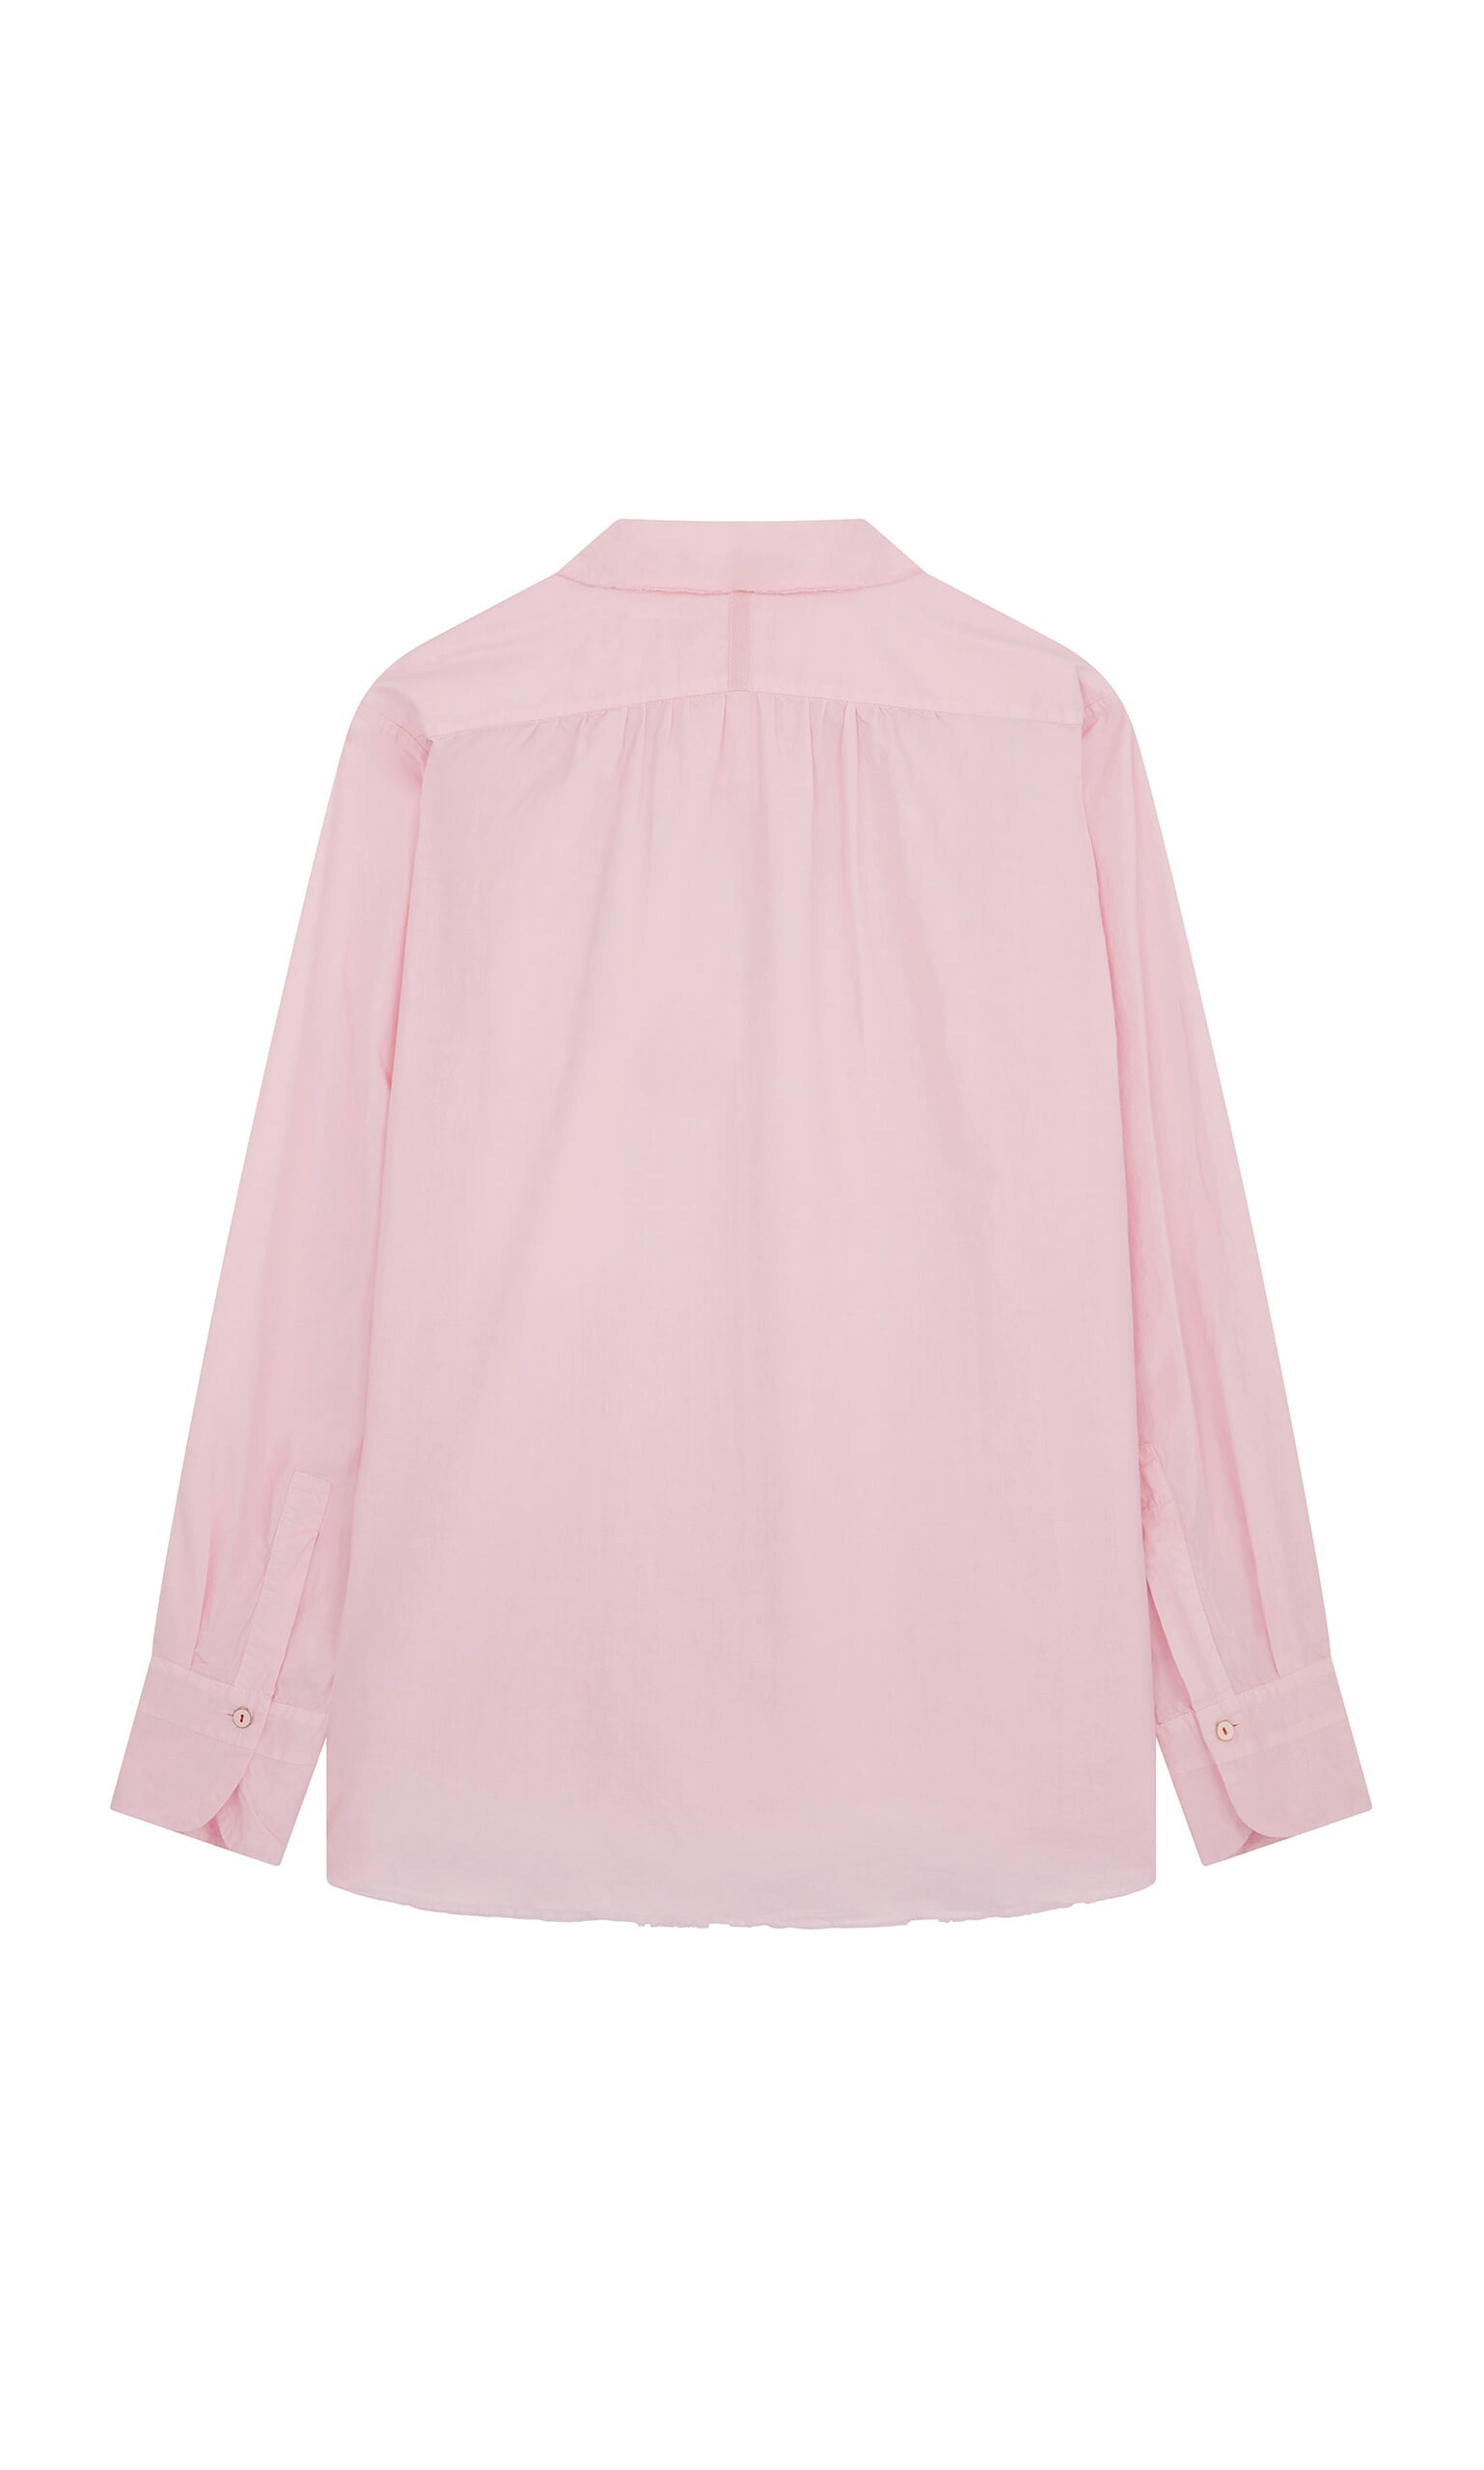 Oversized Pink Shirt - Plümo Ltd